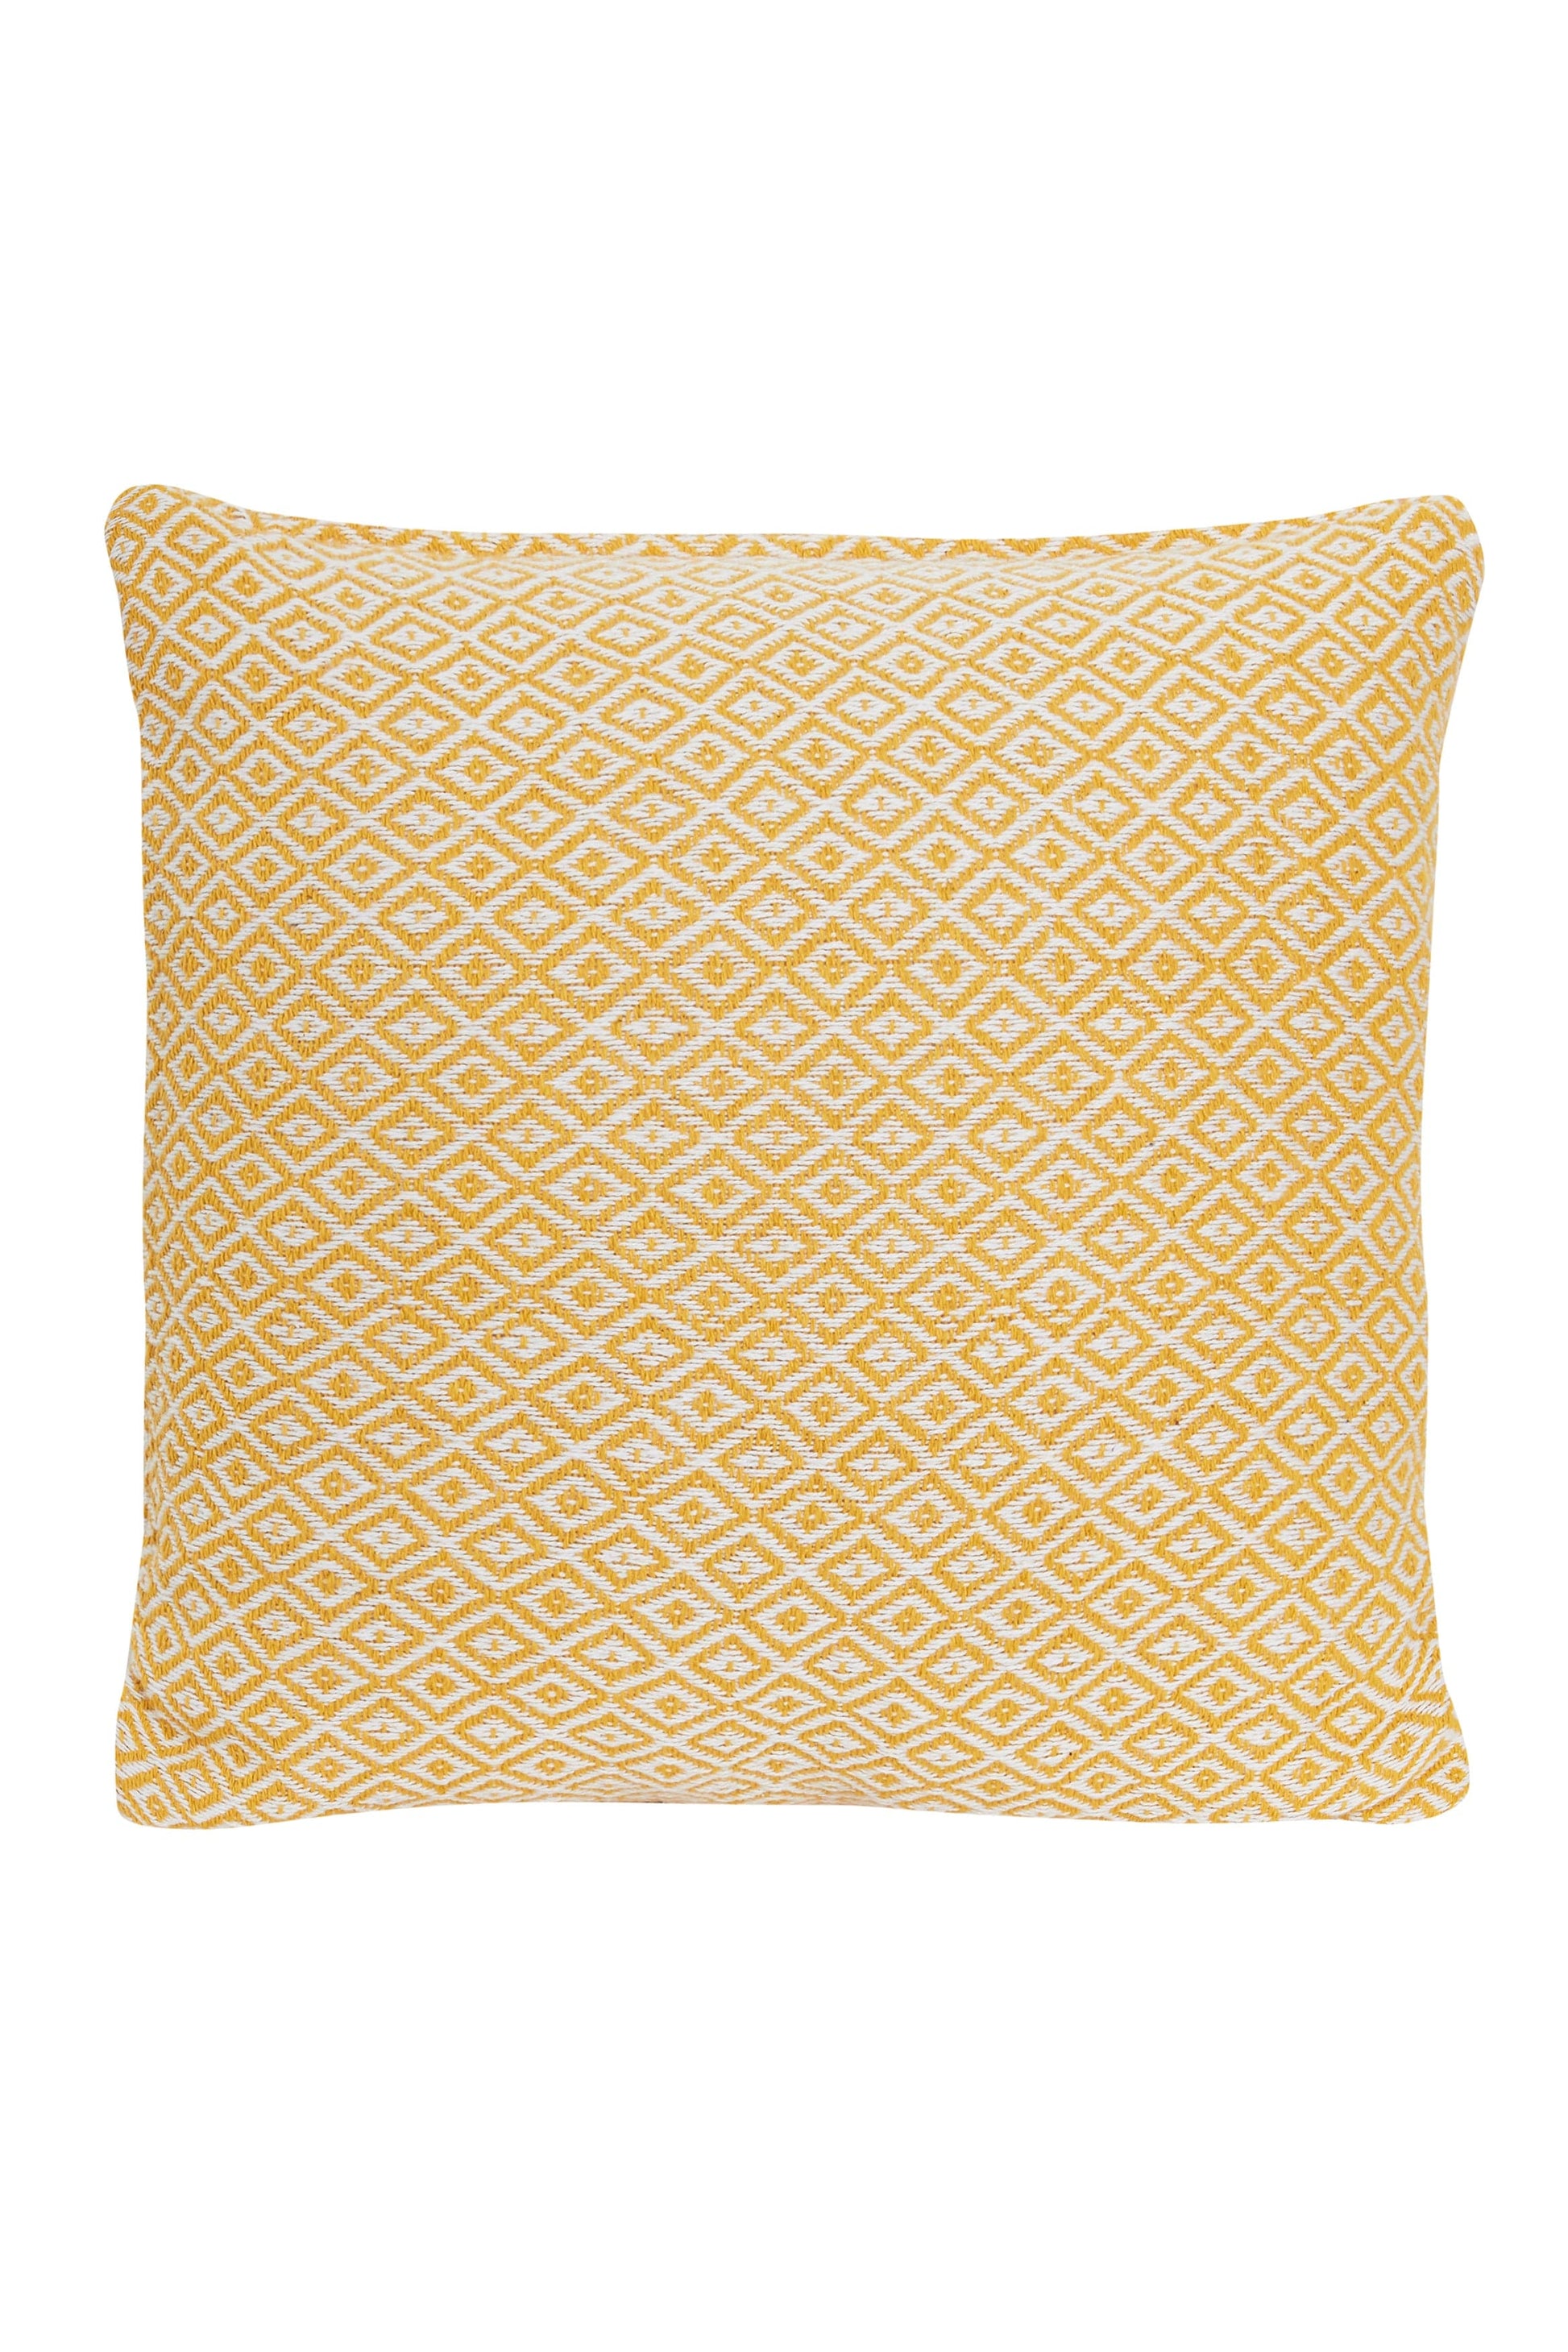 Regal Pure Cotton Cushion Cover OCHRE / 43 x 43 cm OLIVIA ROCCO Cushions